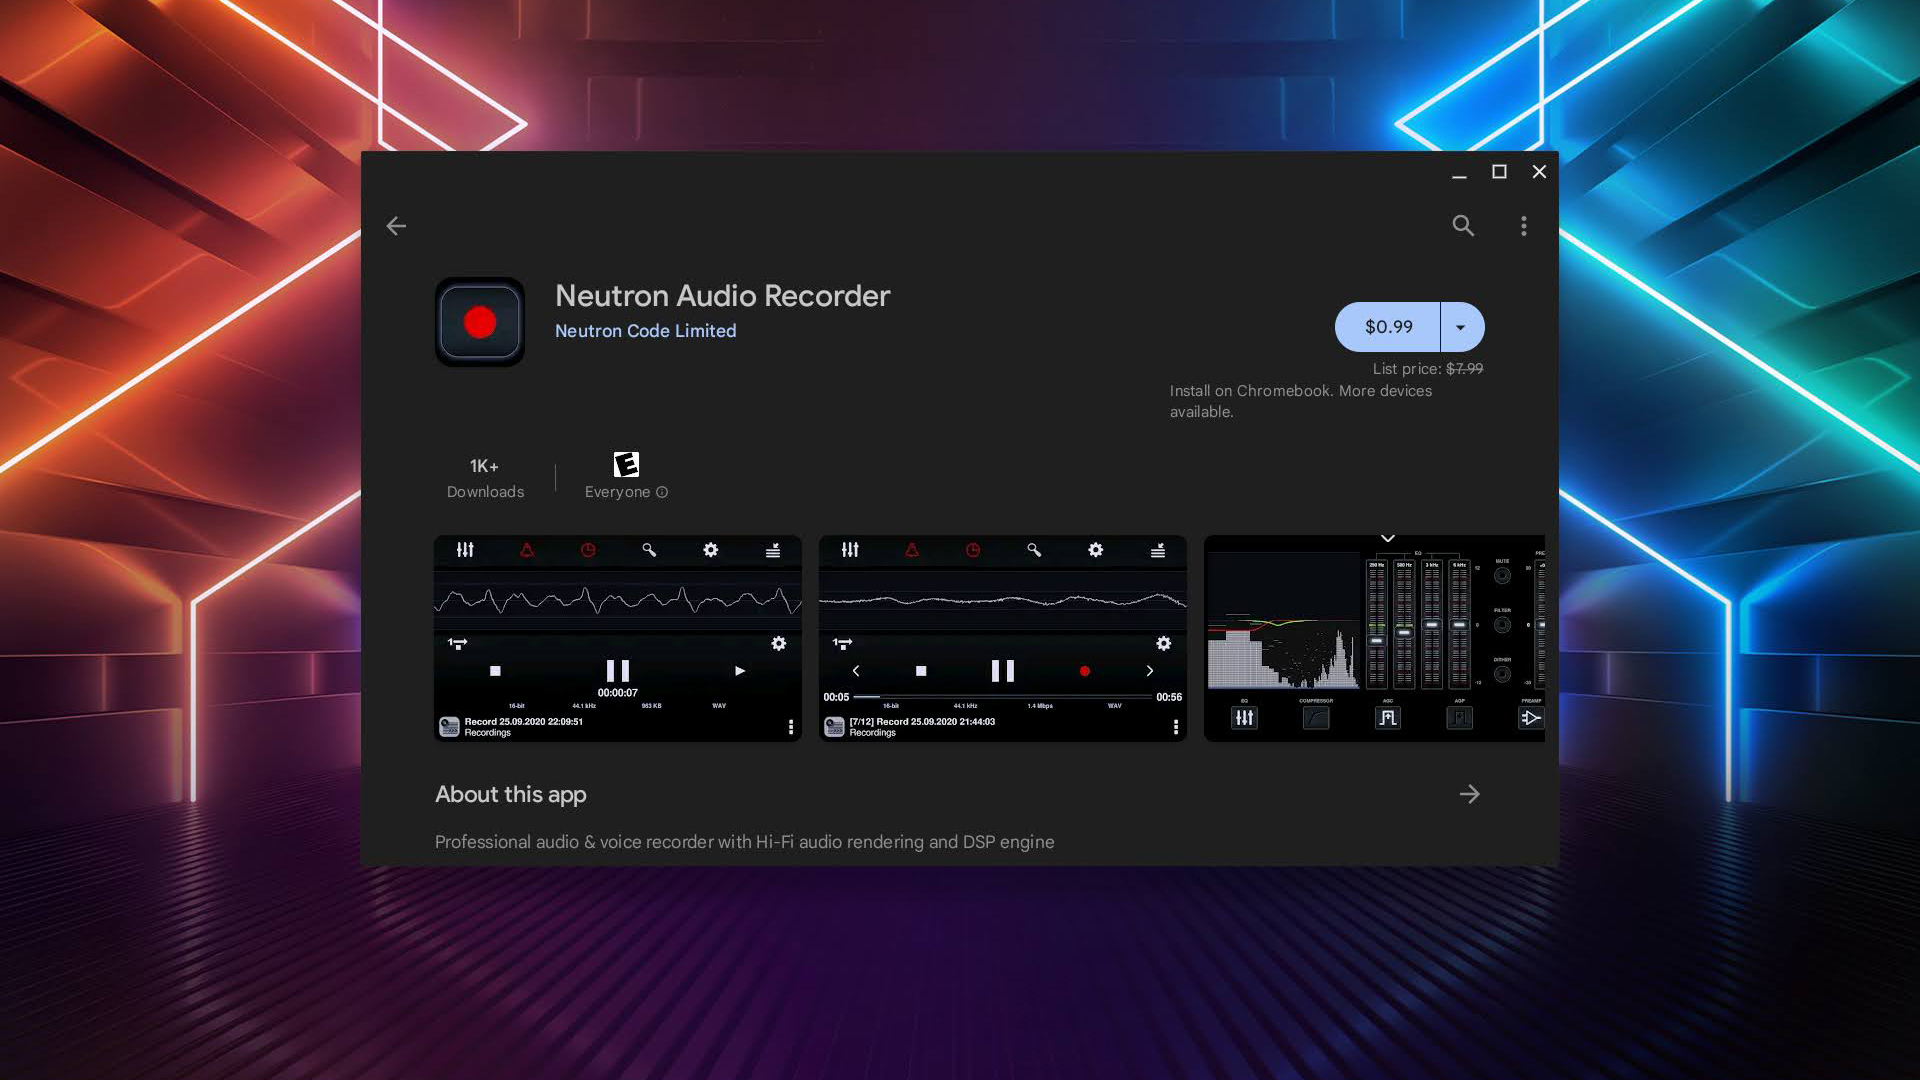 Neutron Audio Recorder on Chromebook